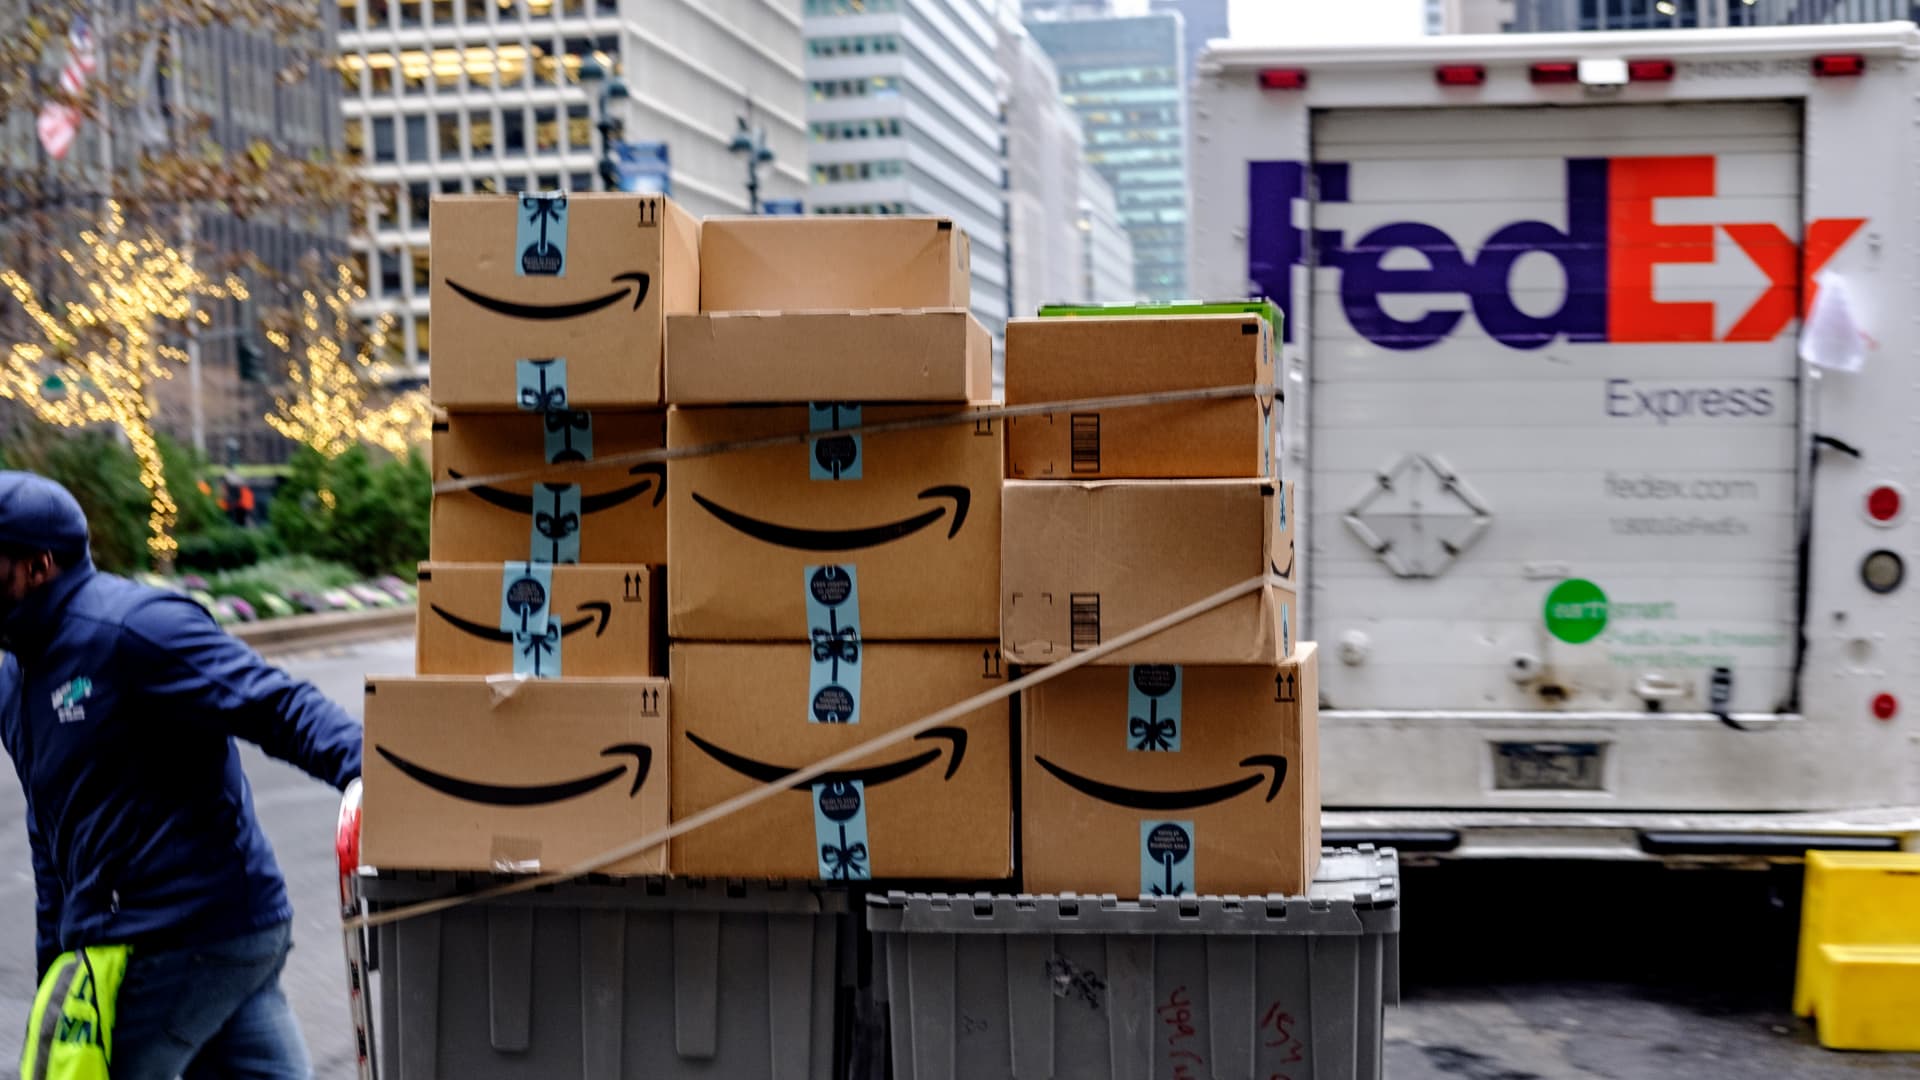 FedEx and Amazon Explored Partnership in eCommerce Returns Last Year